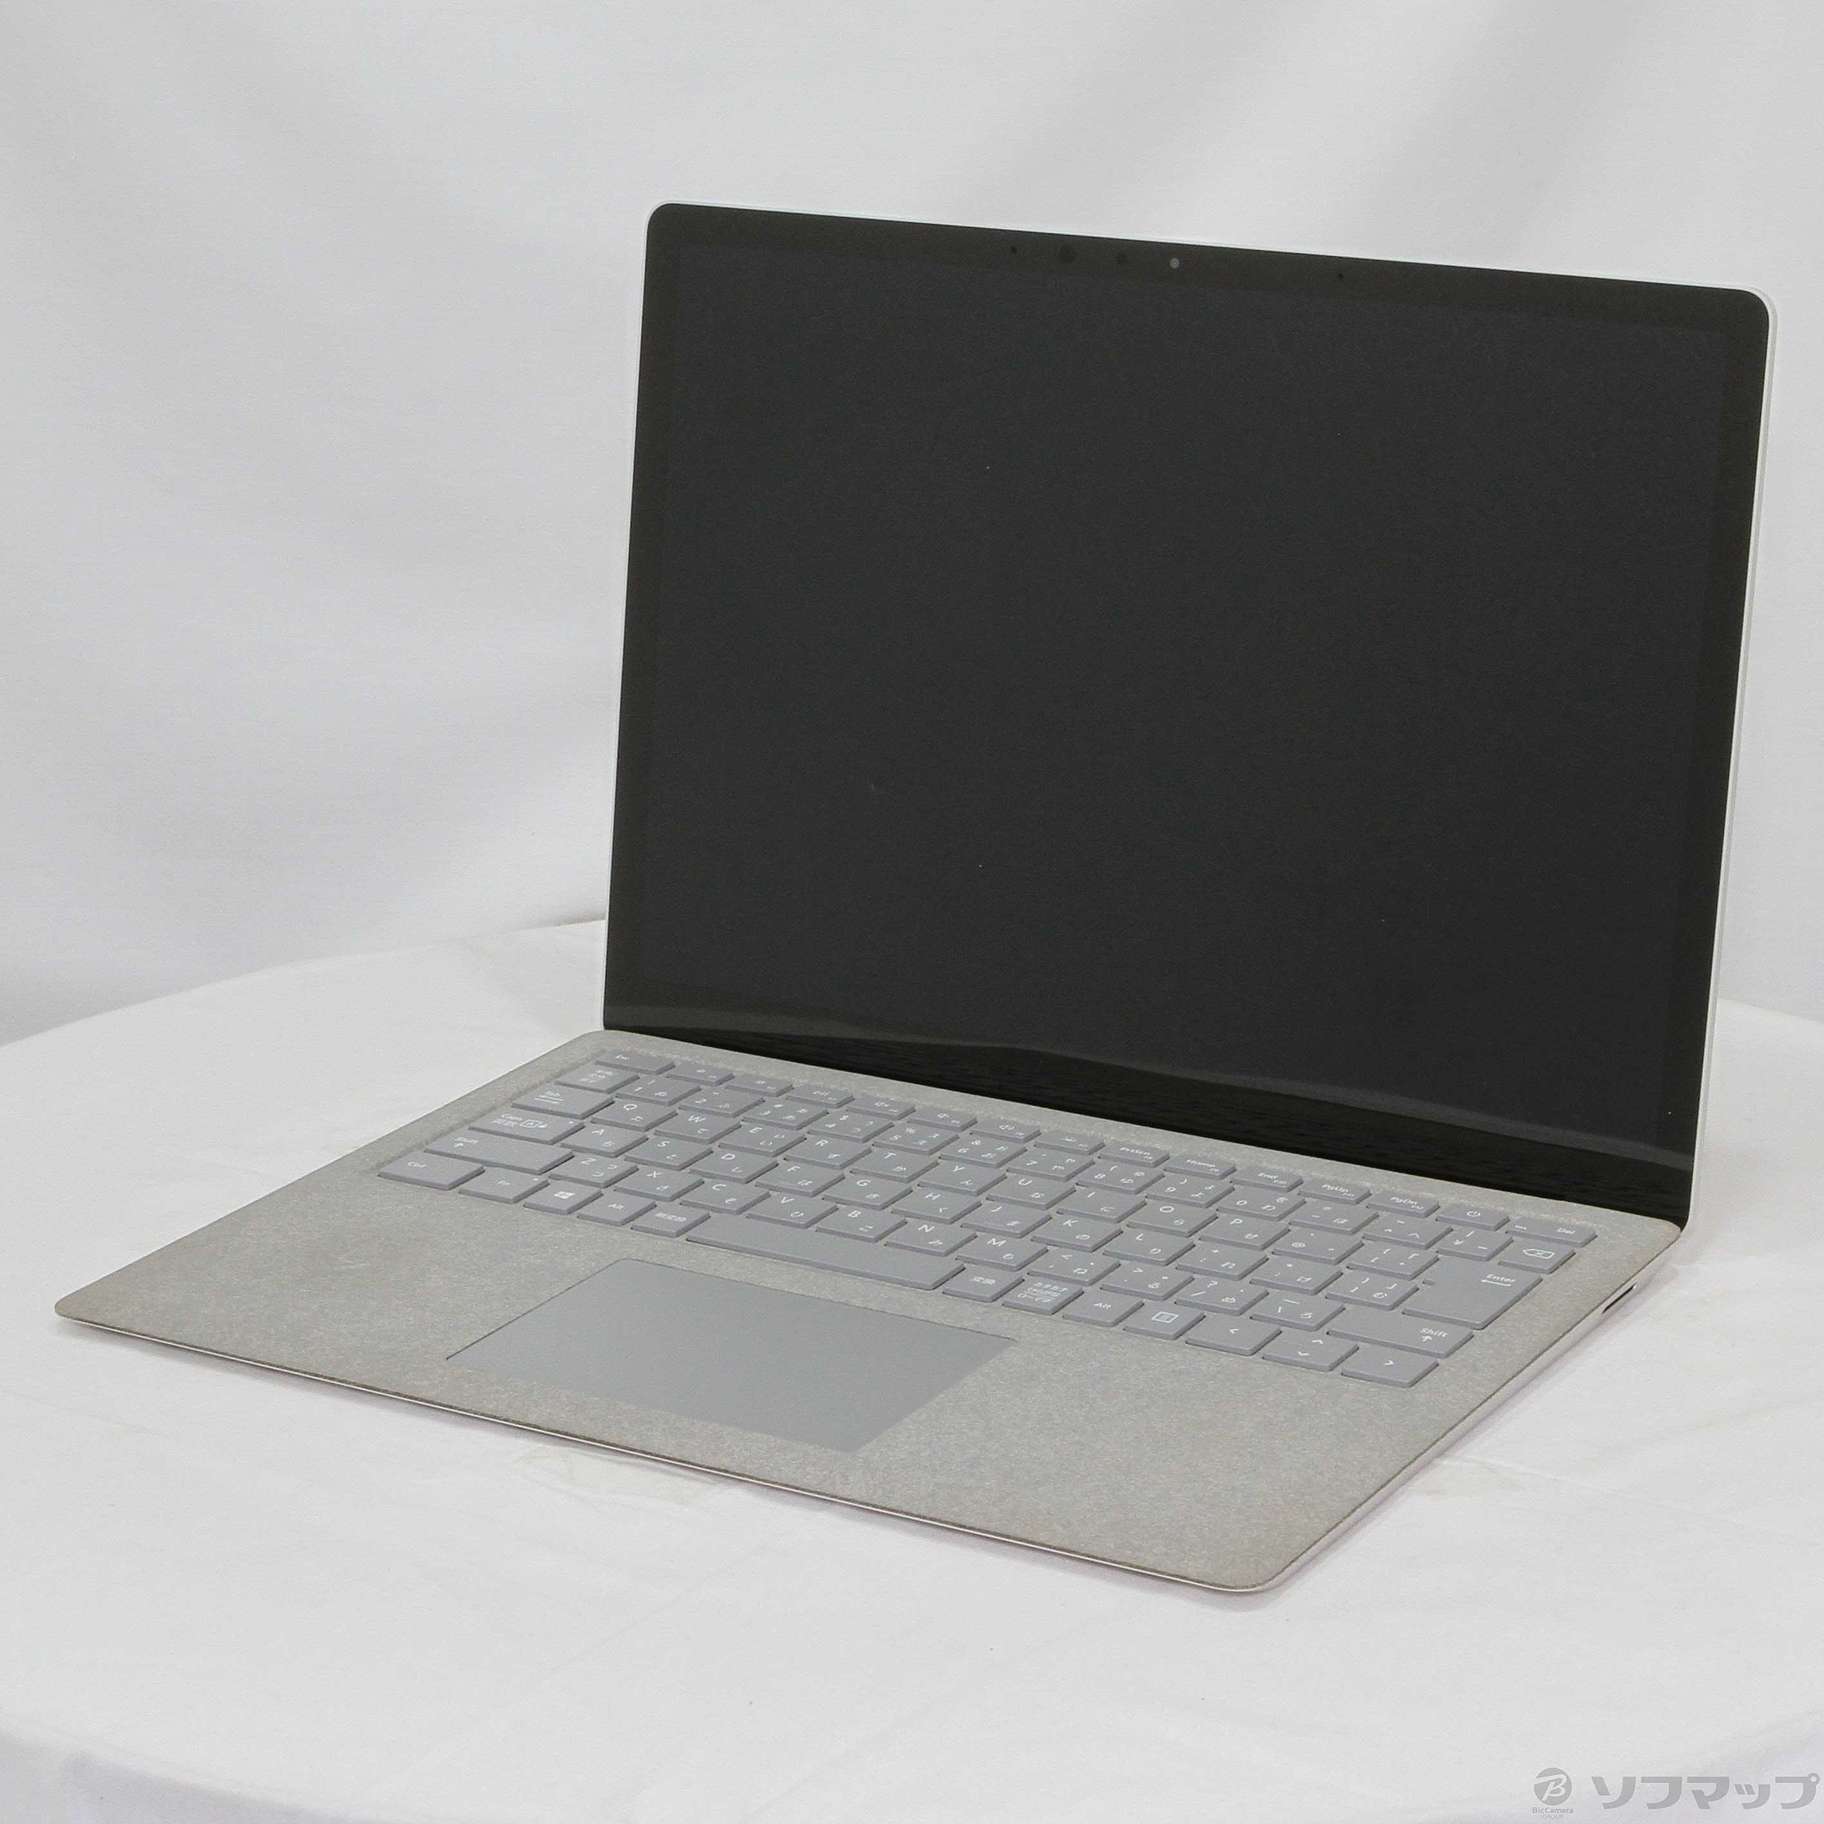 中古】Surface Laptop 2 〔Core i5／8GB／SSD128GB〕 LQL-00019 